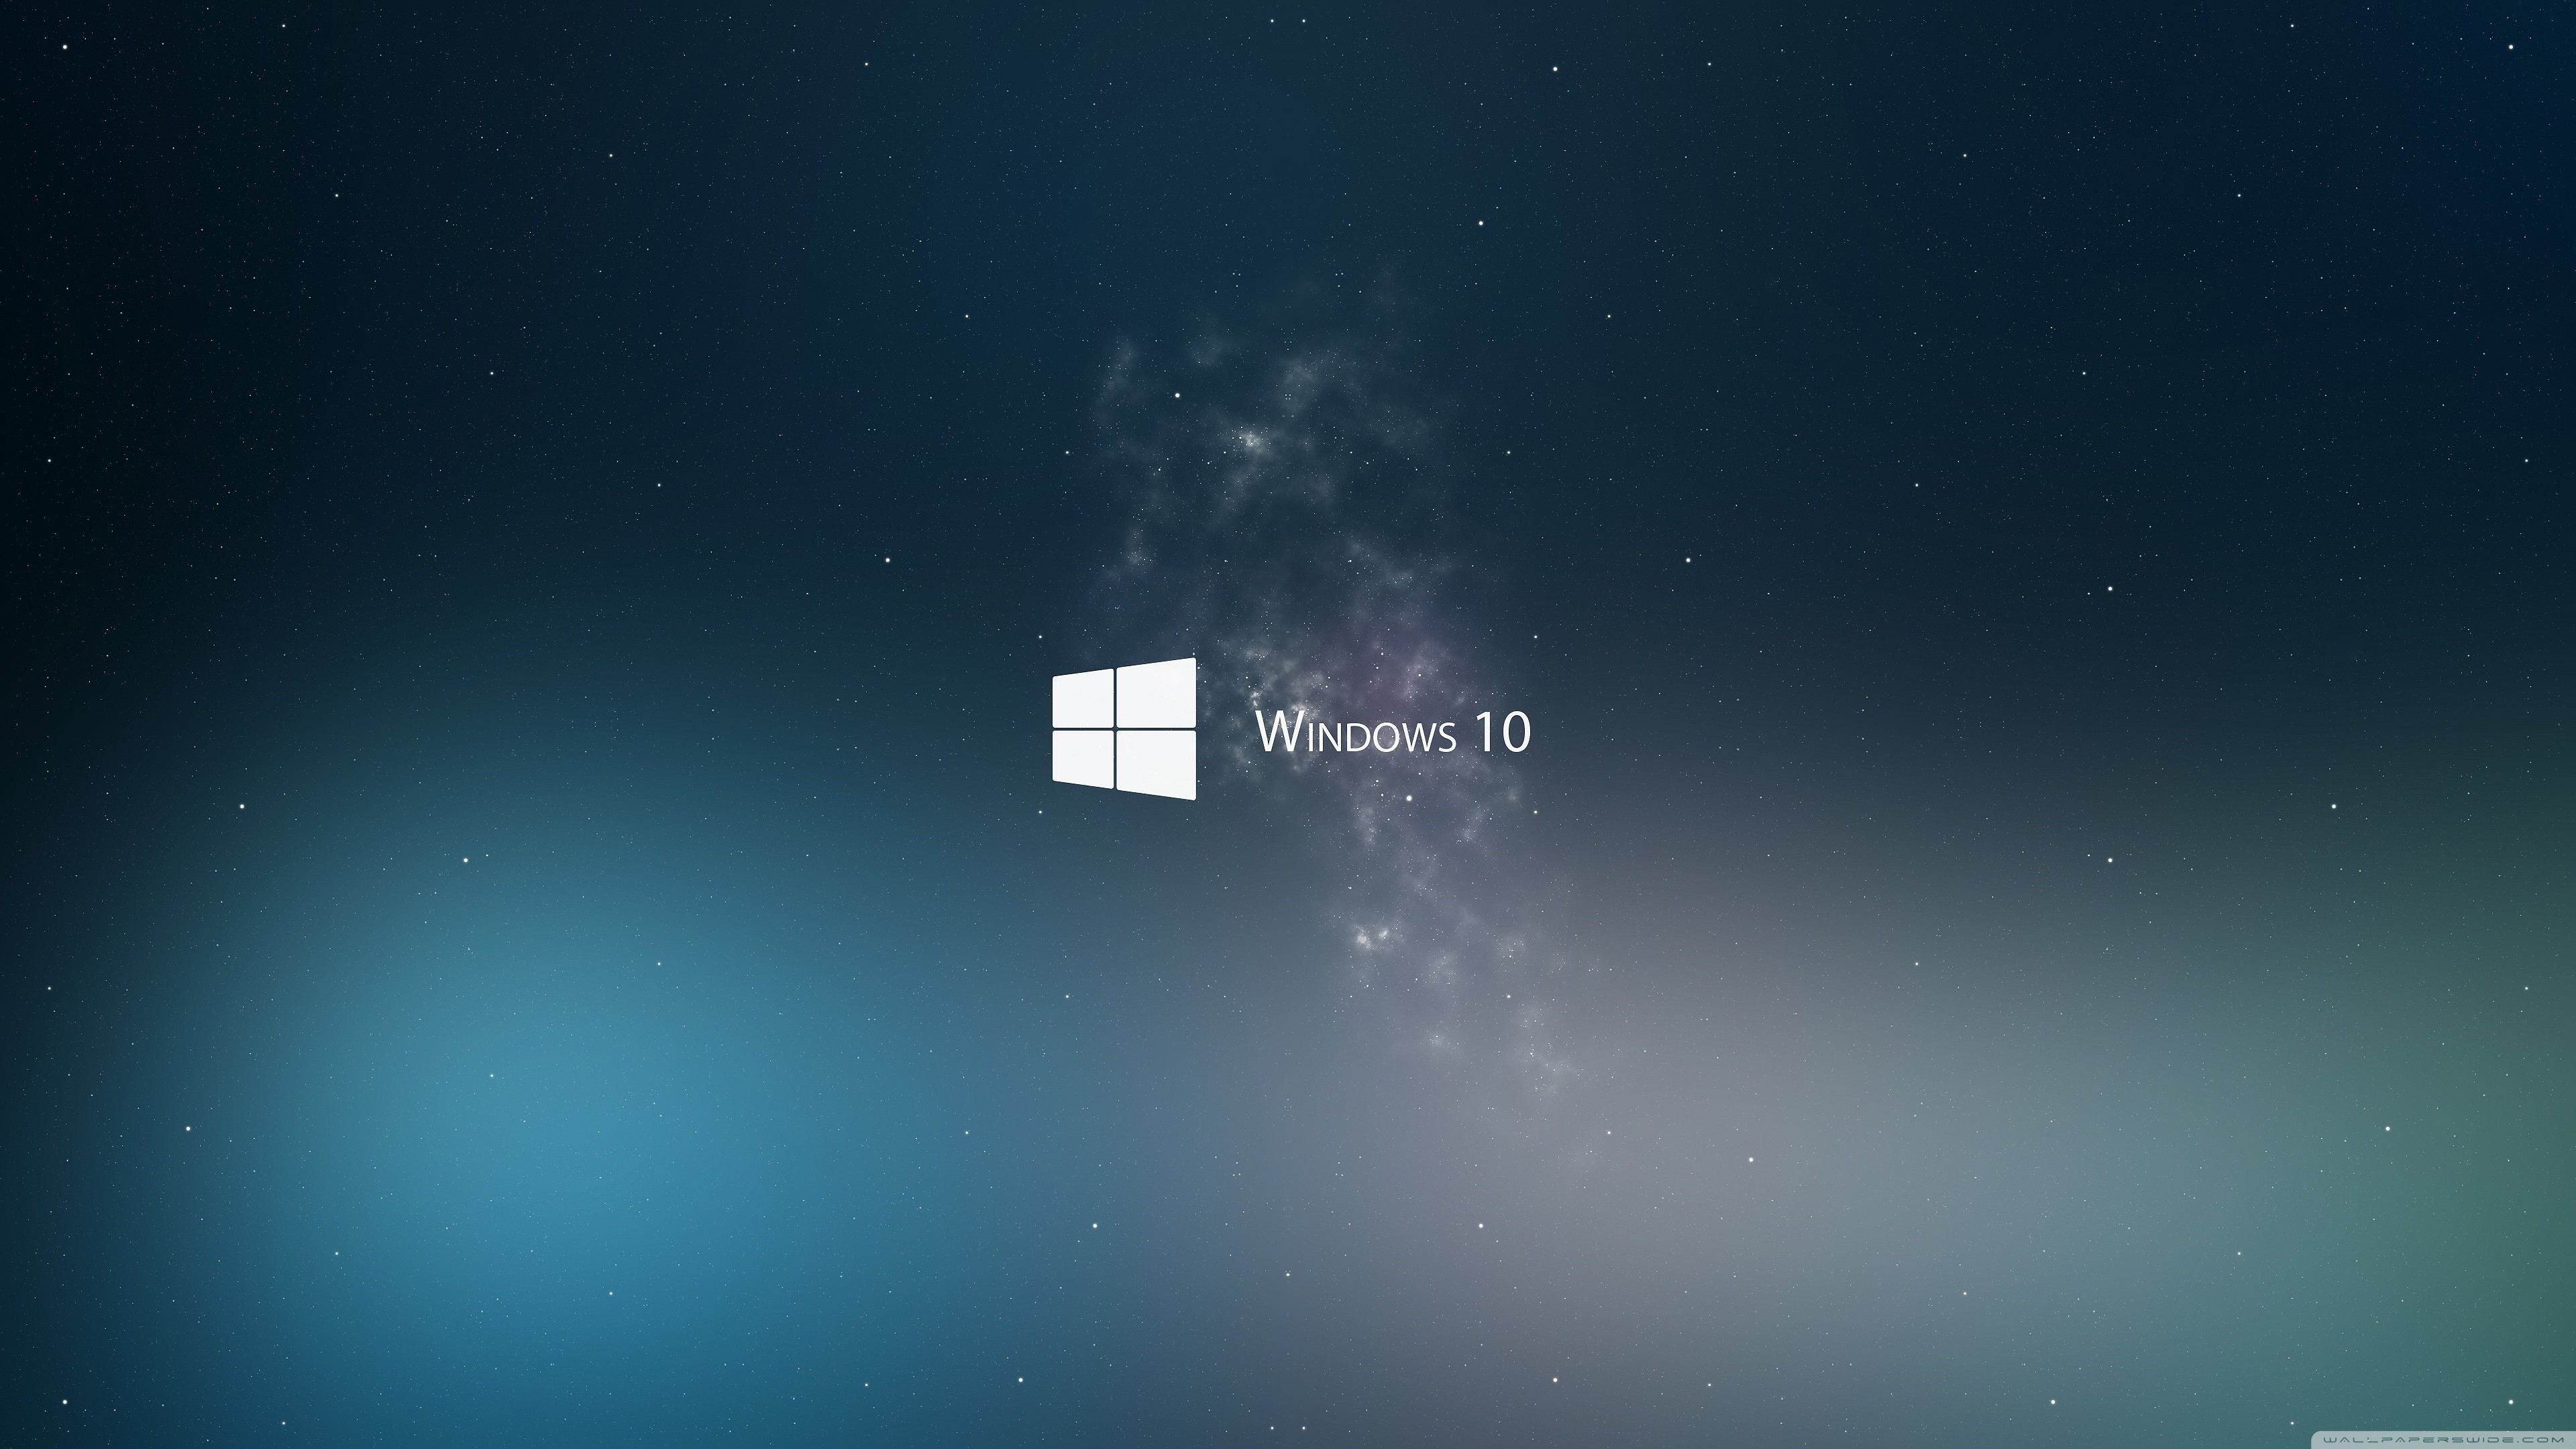 Windows 10 HD Wide Wallpaper for Widescreen